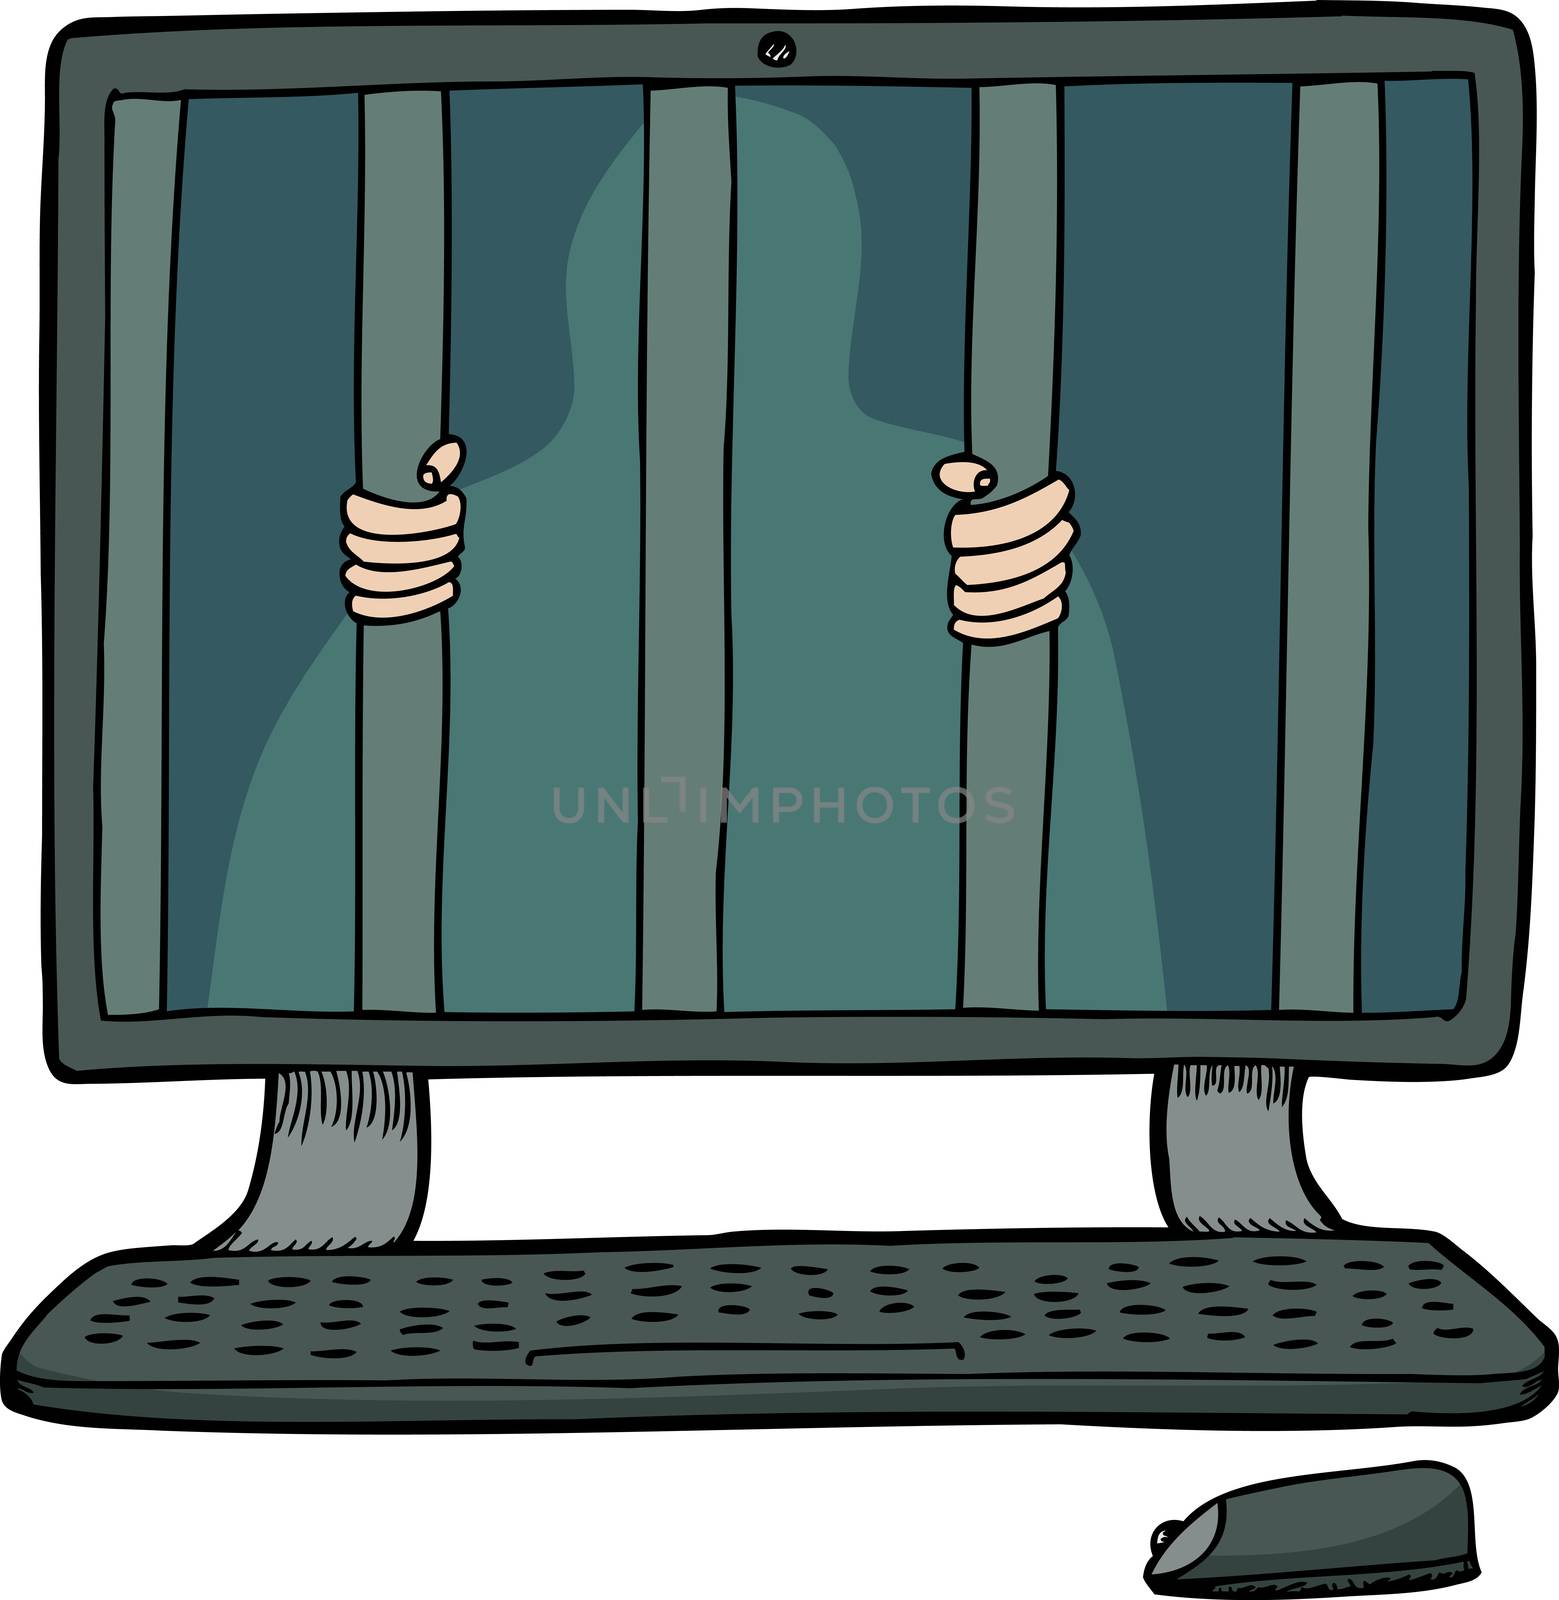 Prisoner Inside a Computer by TheBlackRhino